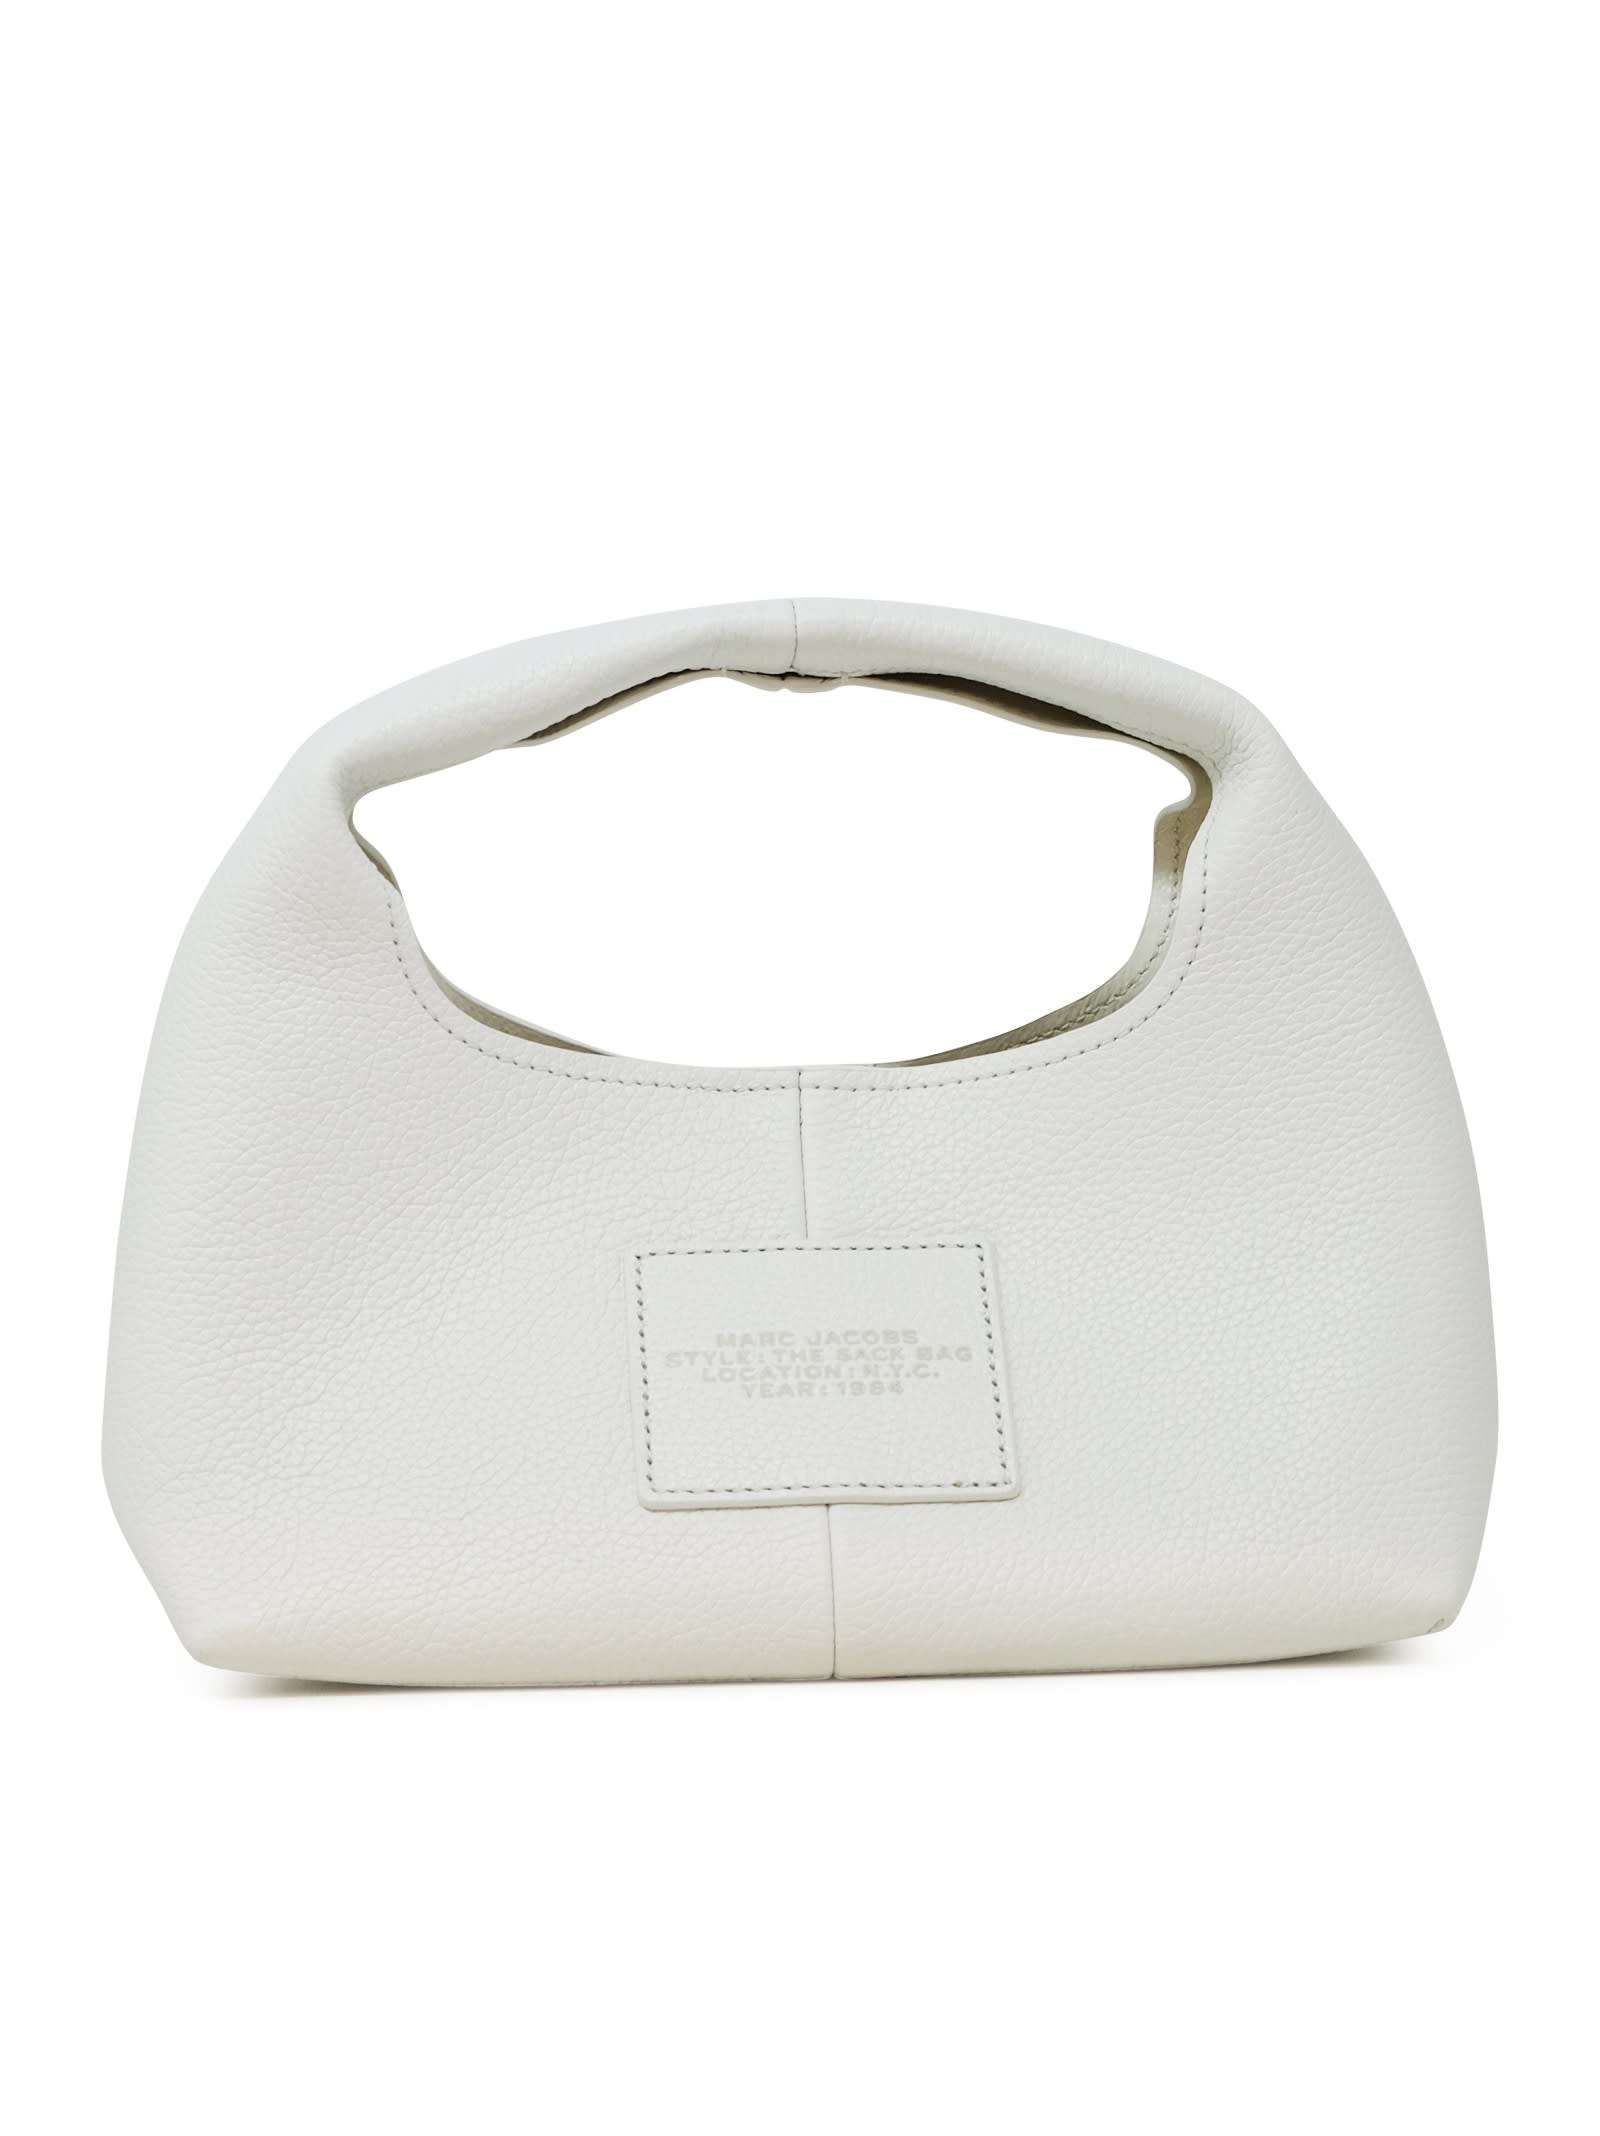 Shop Marc Jacobs White Leather The Mini Sack Bag